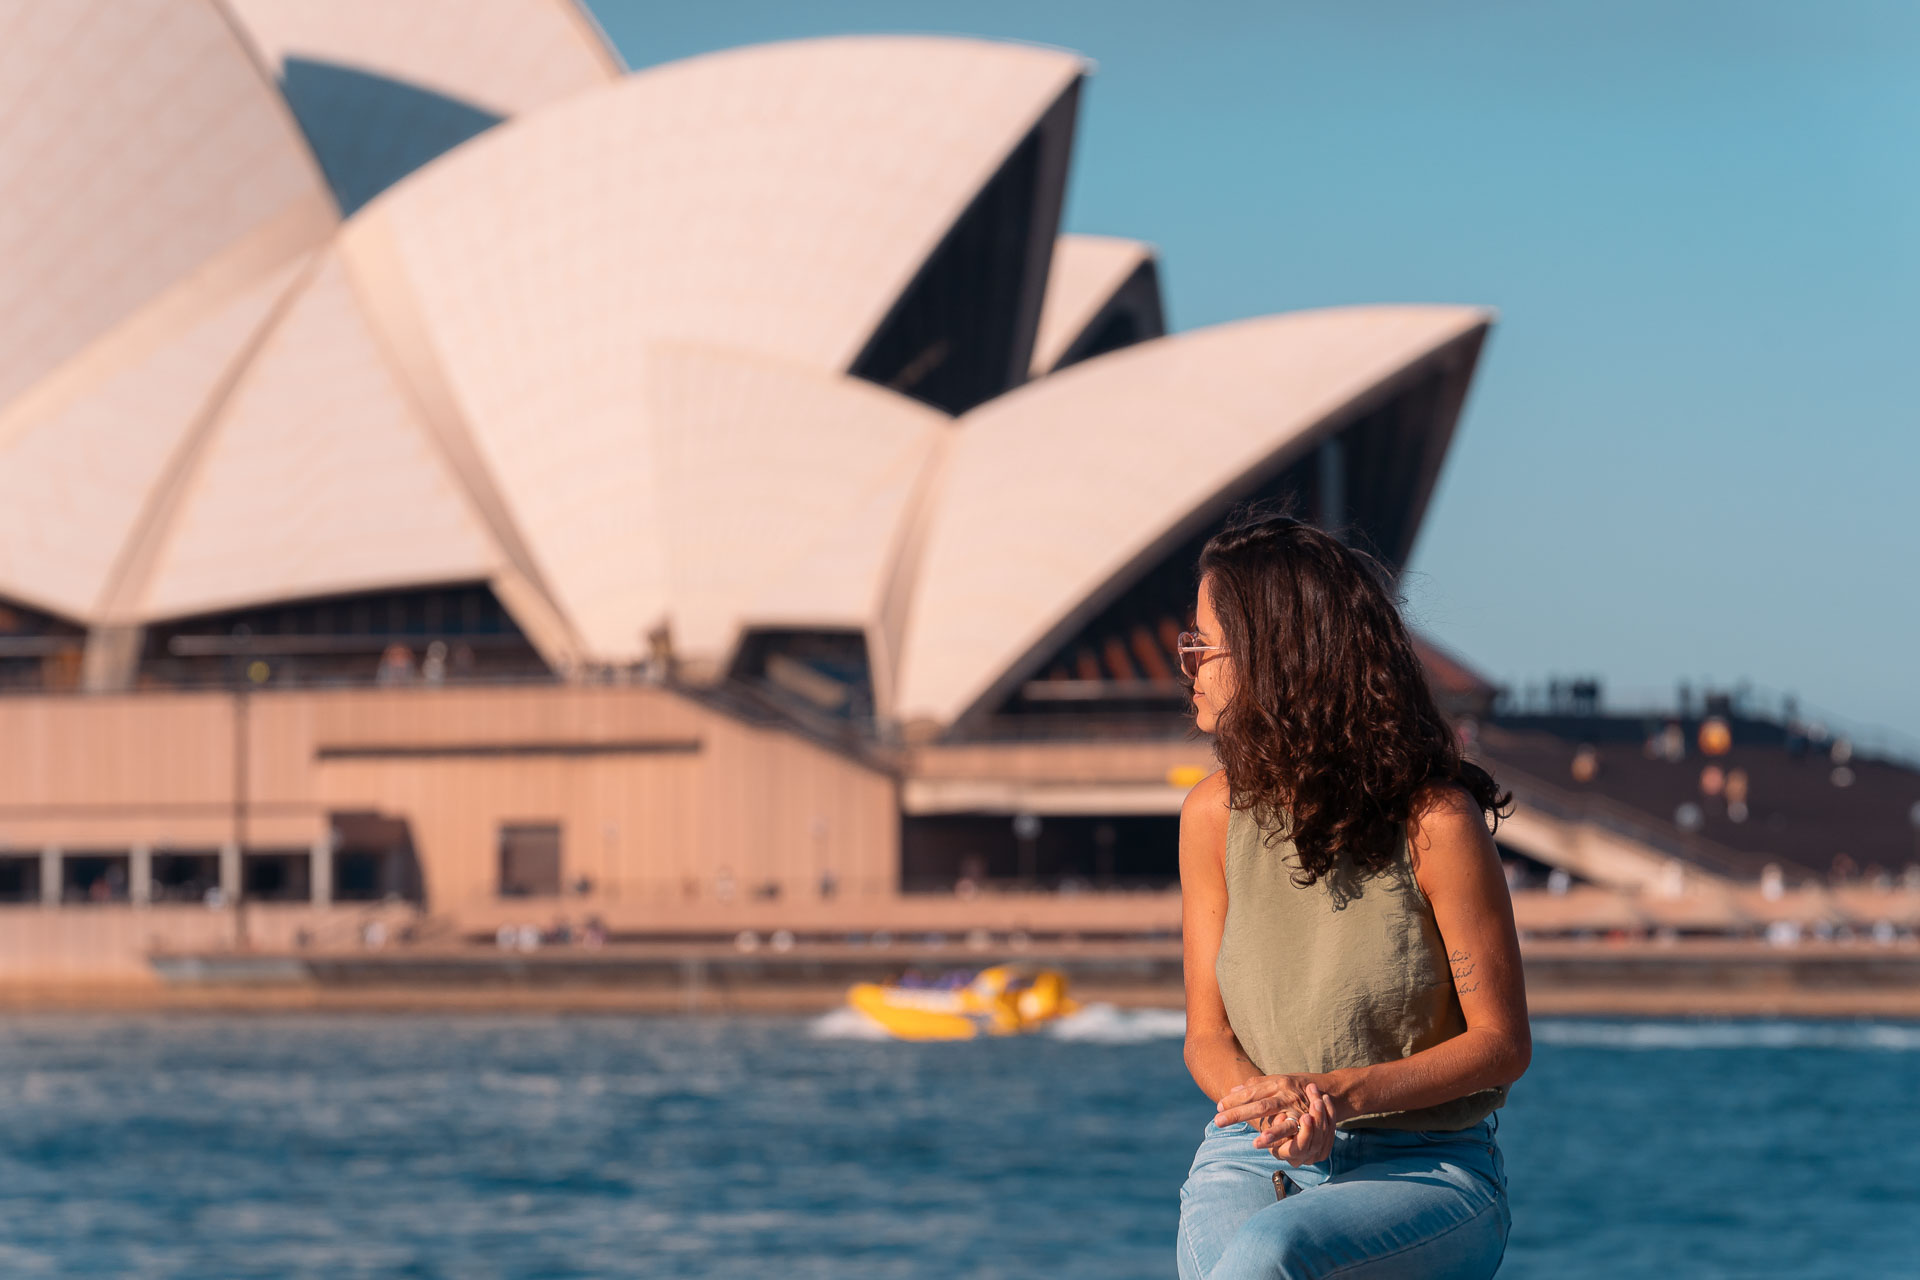 Fernanda looking back at the Sydney Opera House